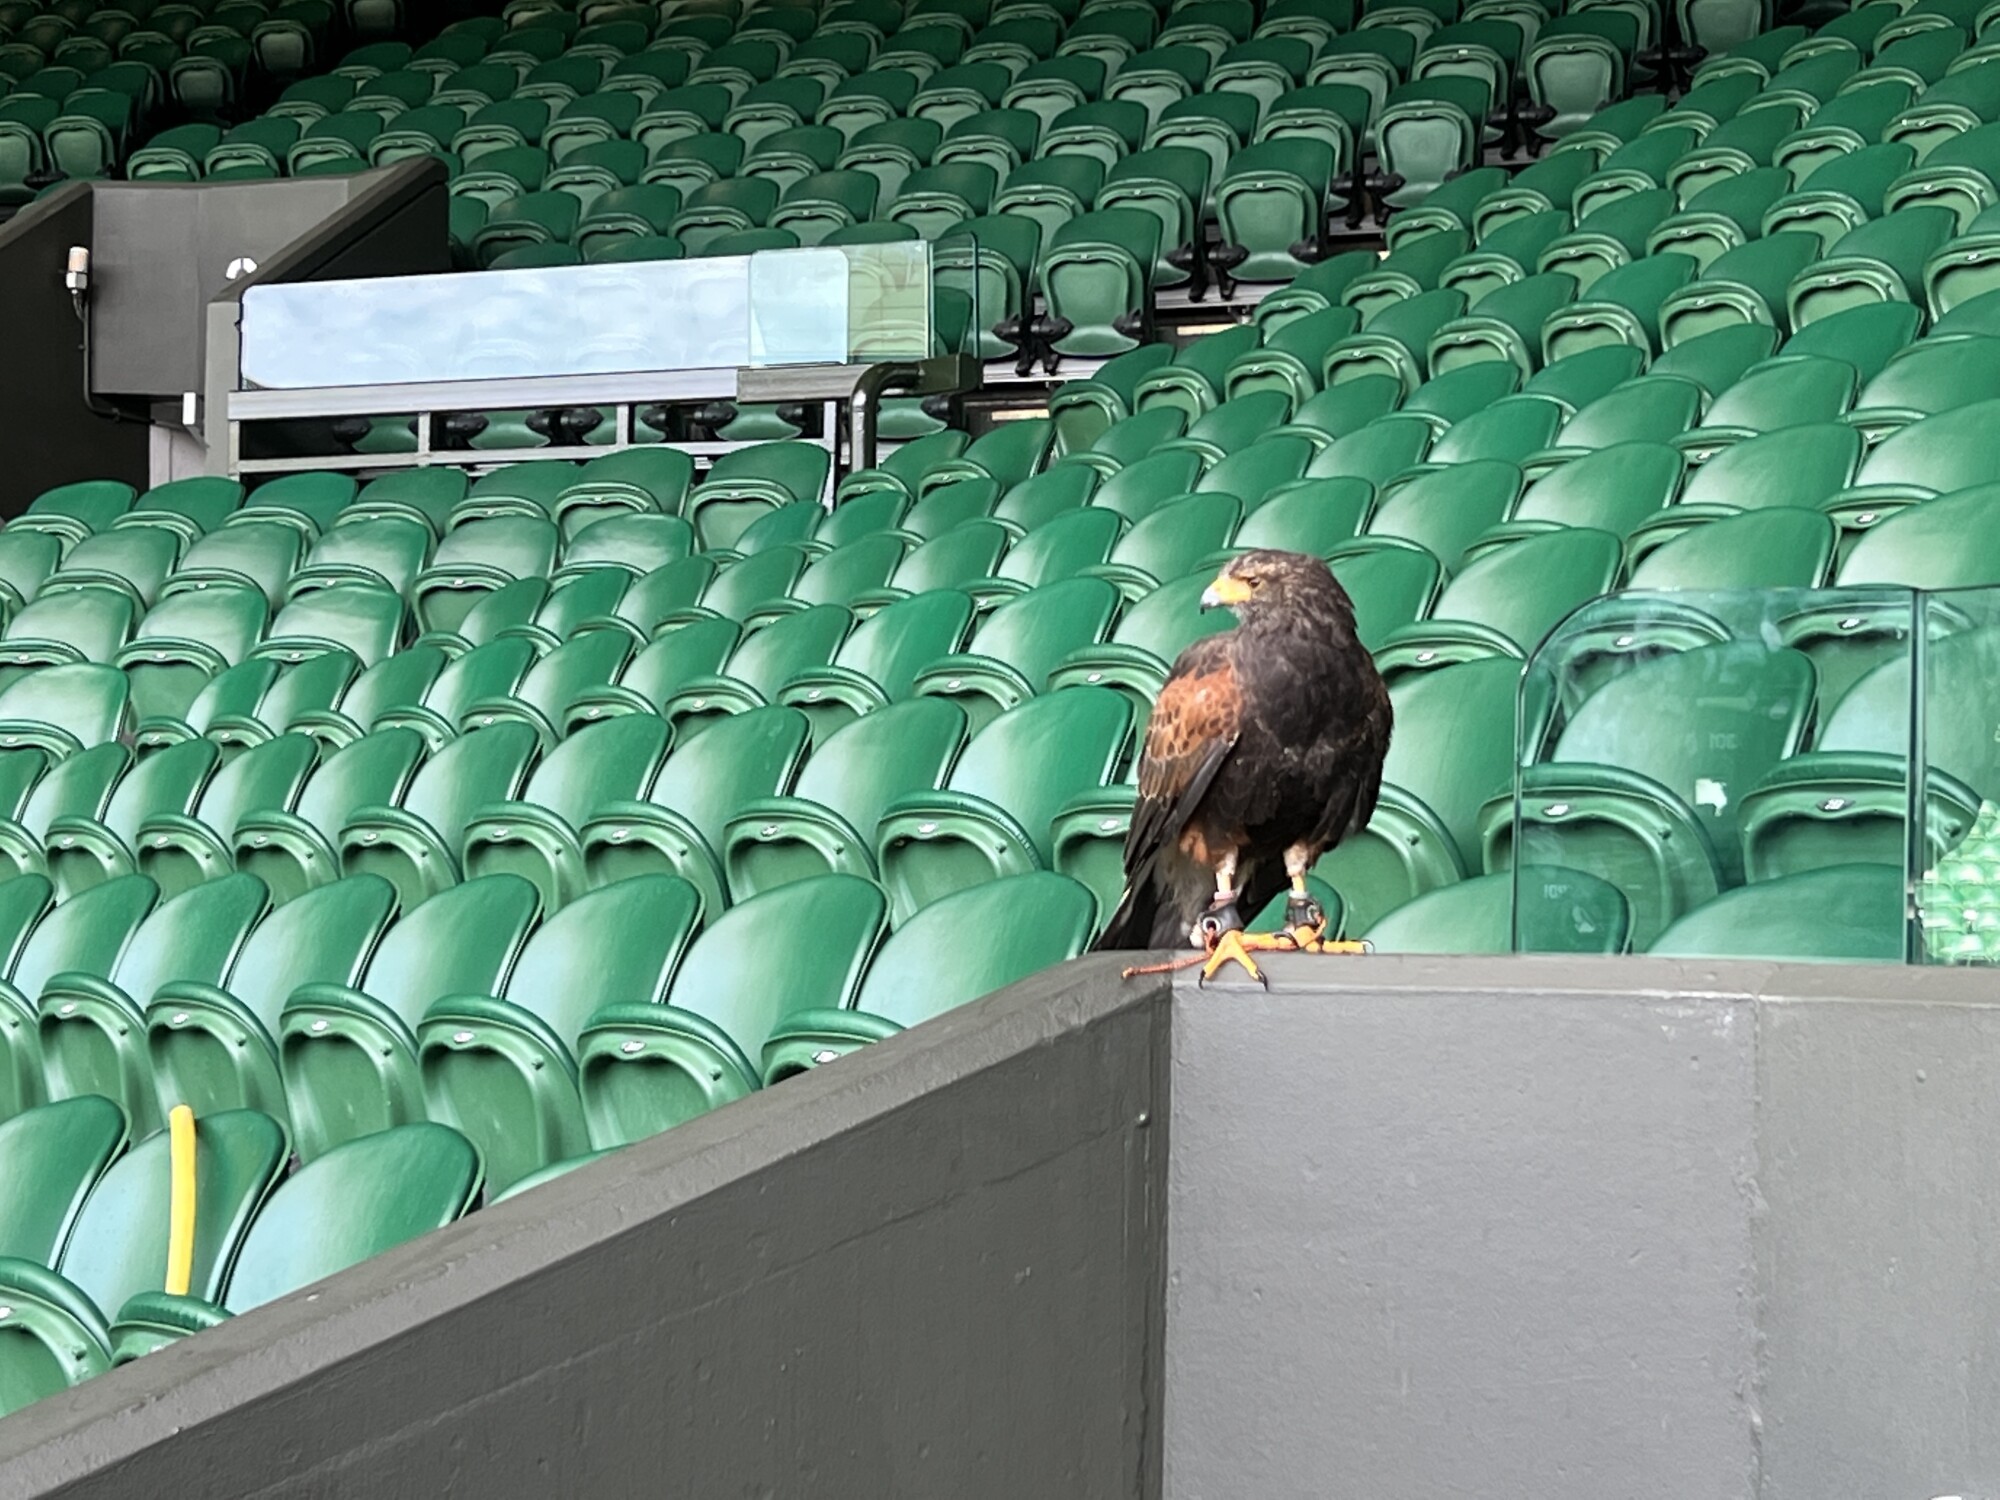 Rufus, the Harris' hawk who patrols Wimbledon, perches near seats.